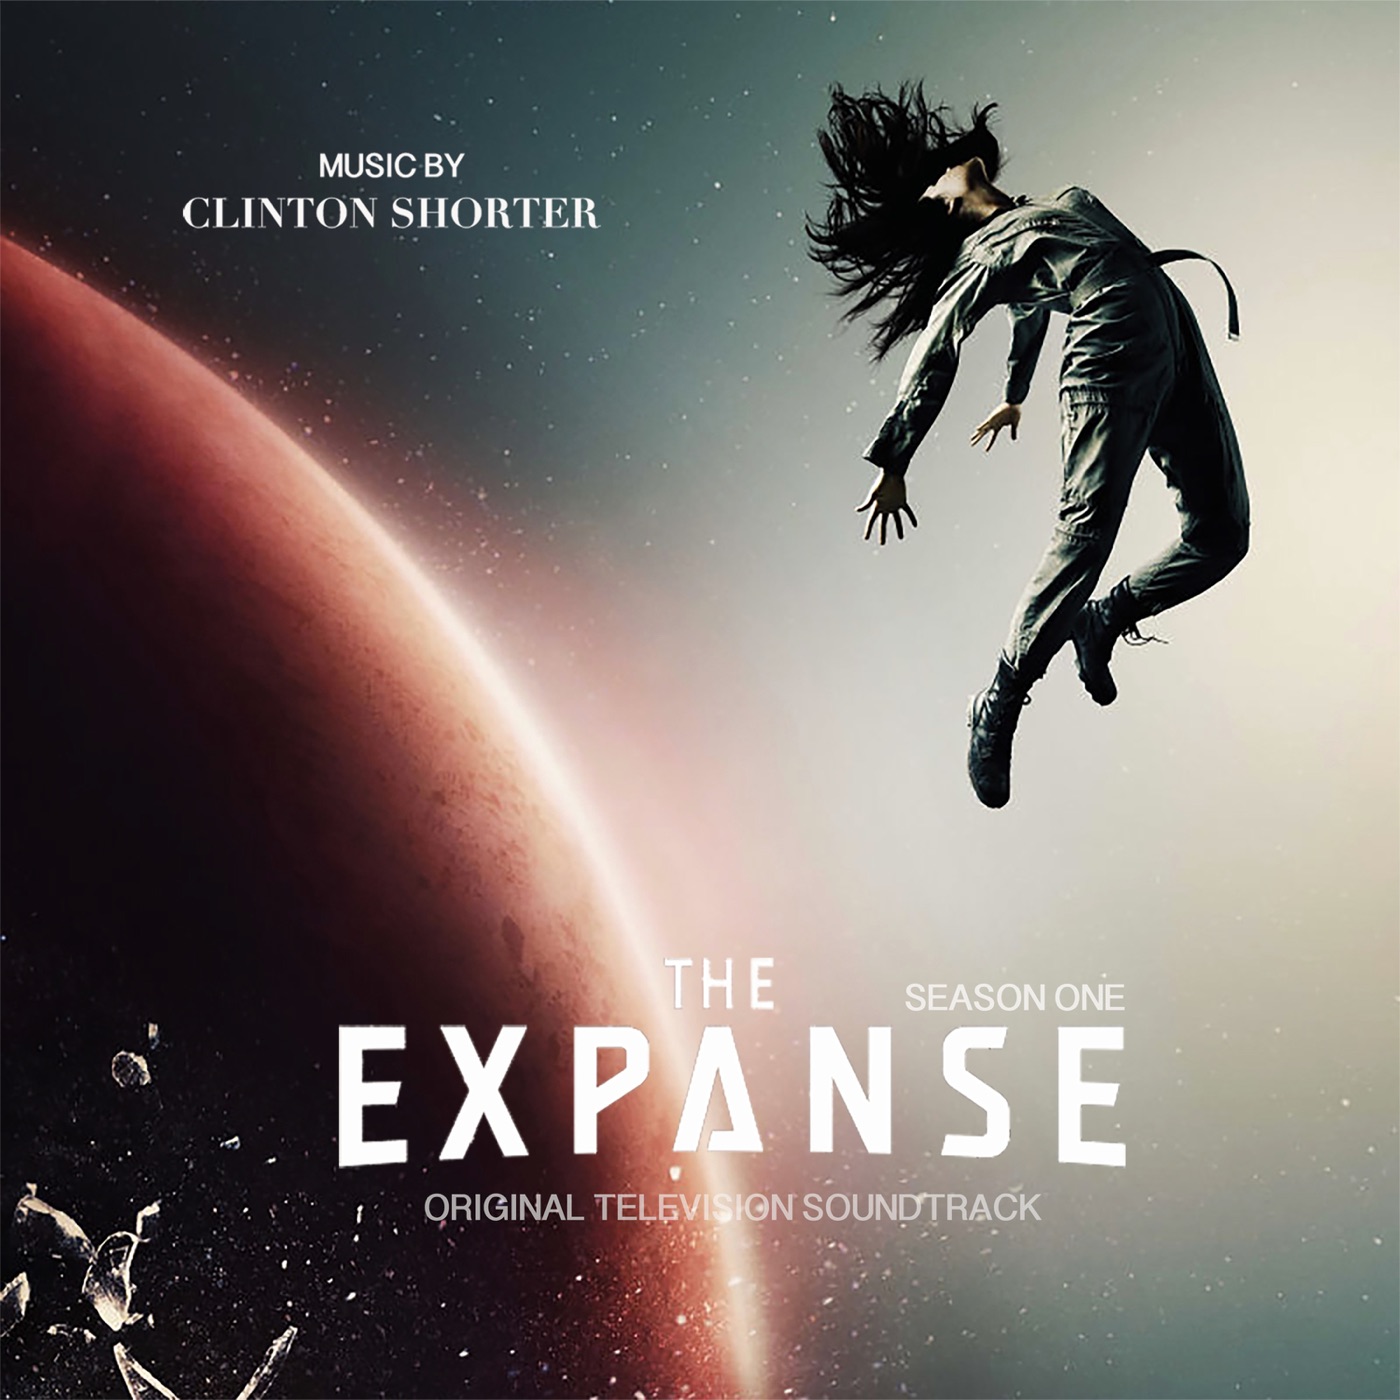 The Expanse (Original Television Soundtrack) by Clinton Shorter